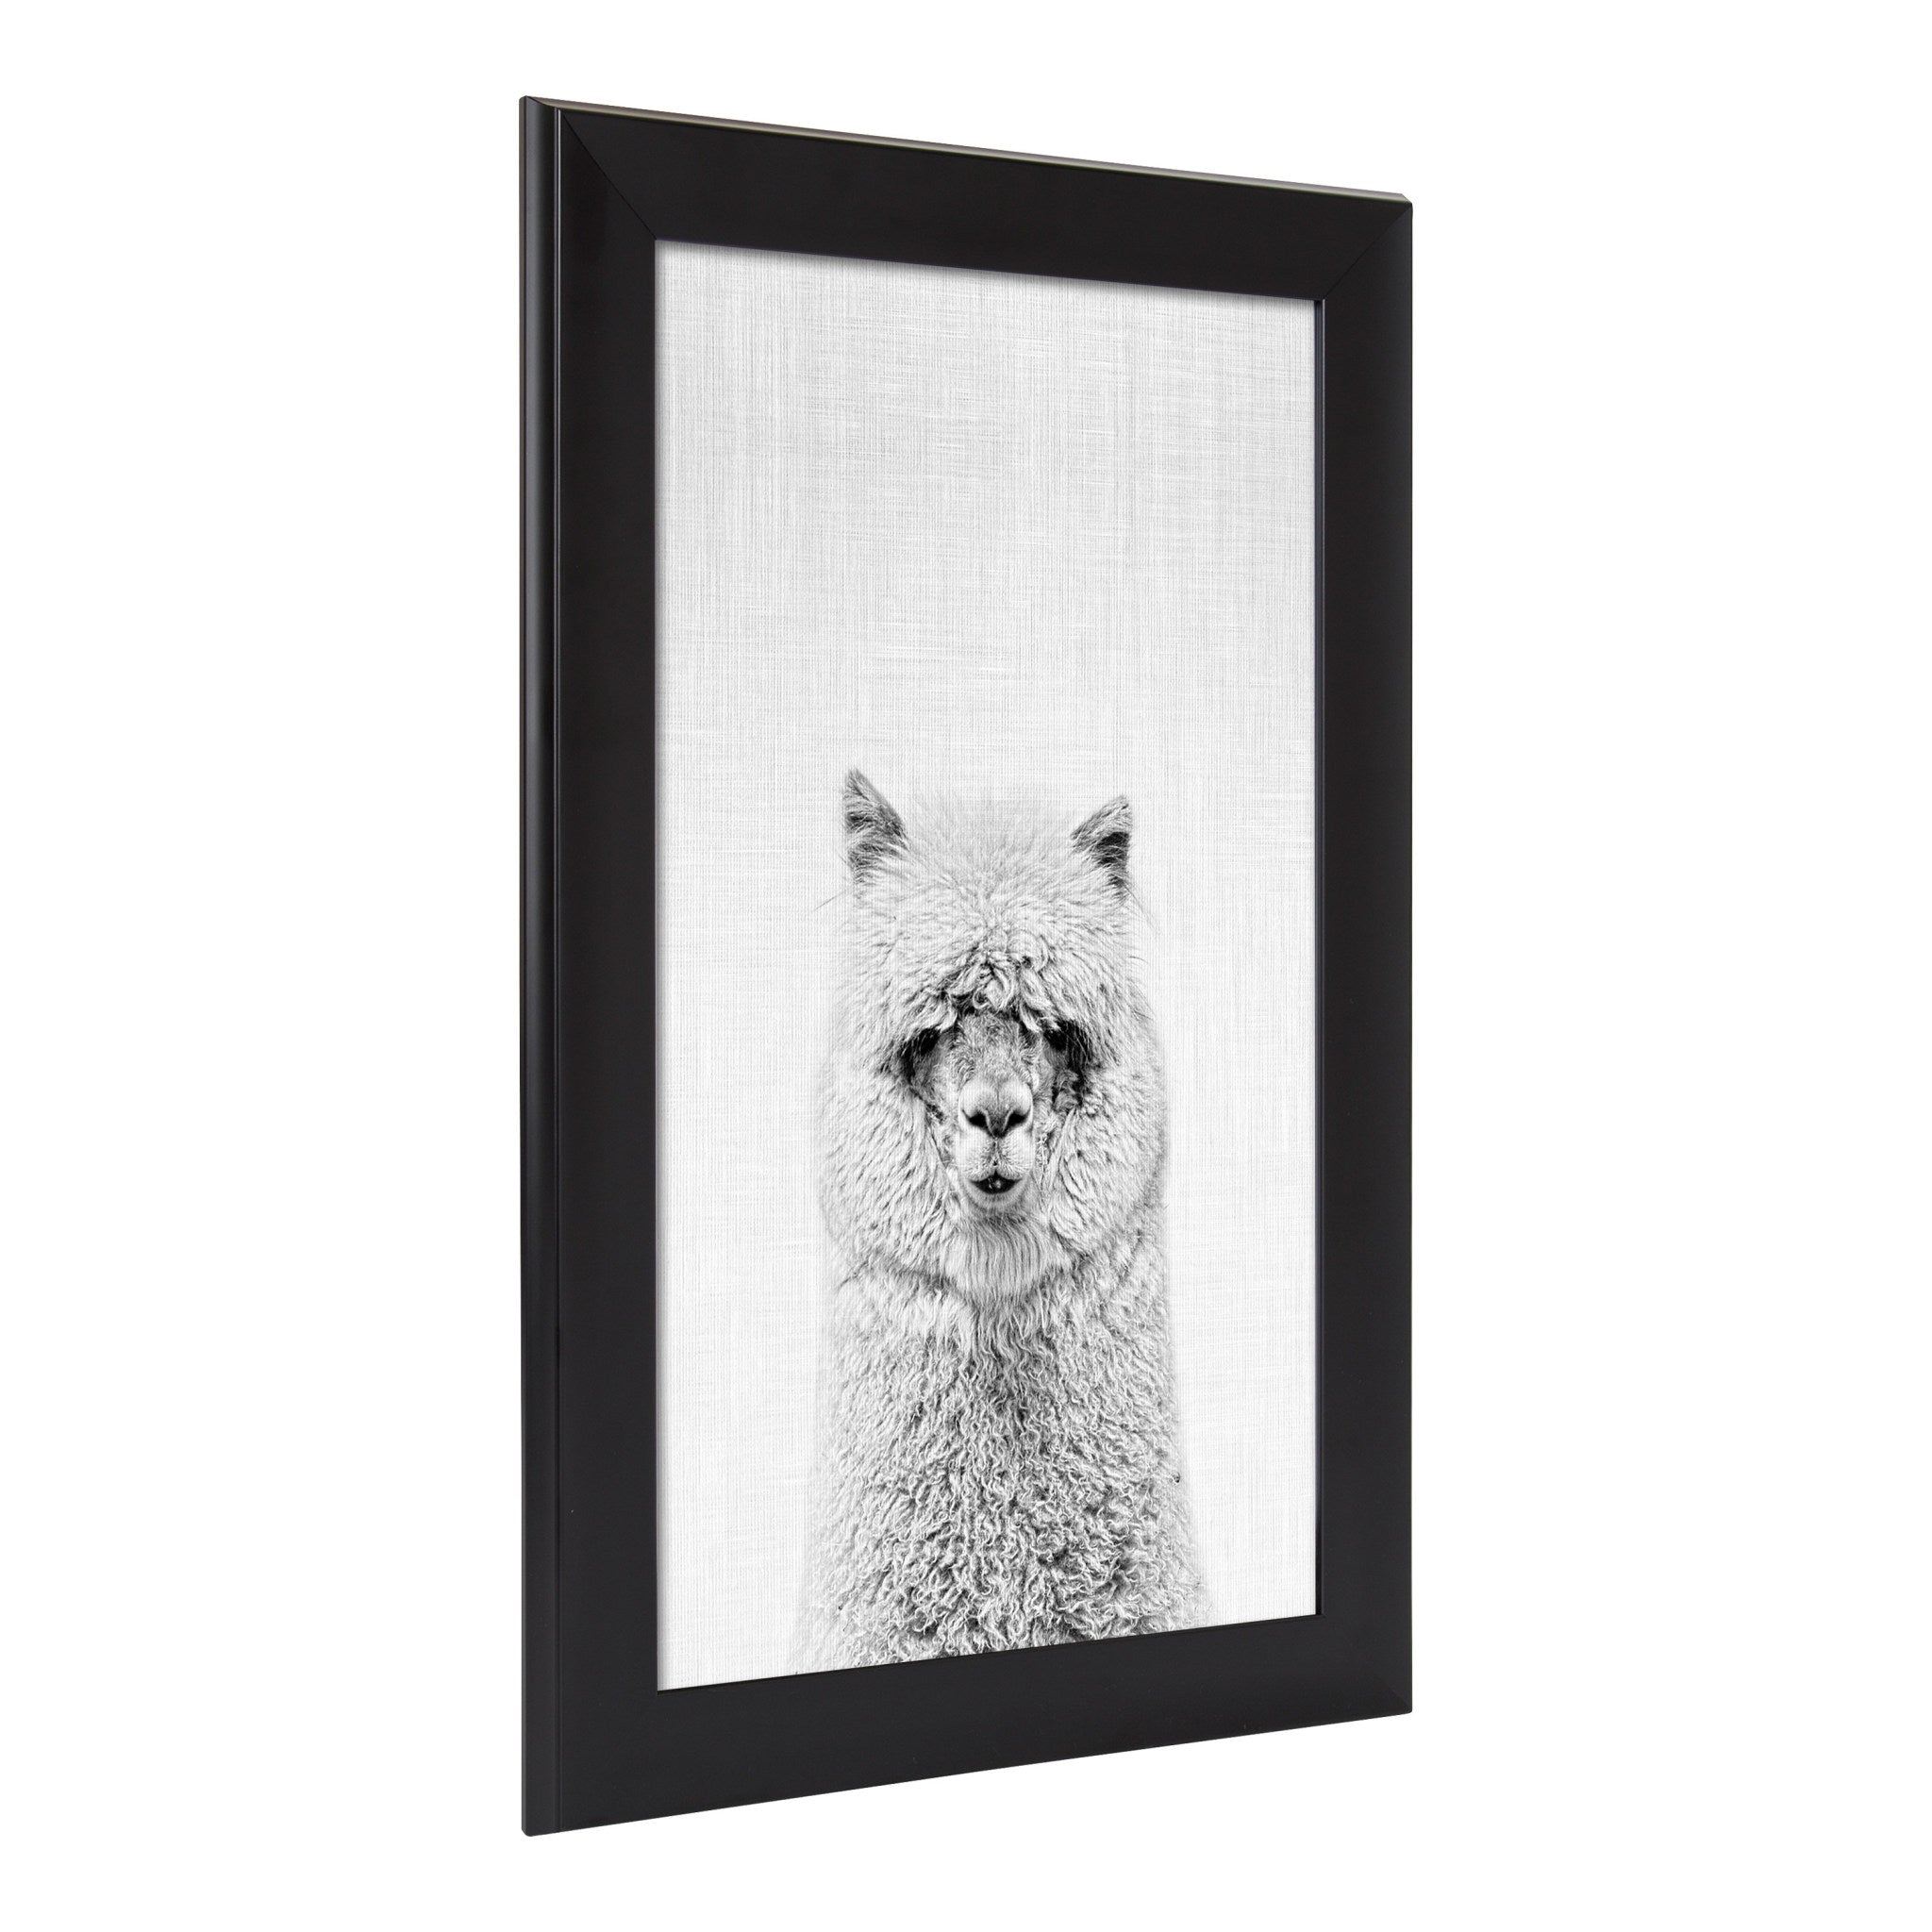 Scoop Hairy Alpaca Animal Framed Wall Art by Simon Te Tai, Black 18x28